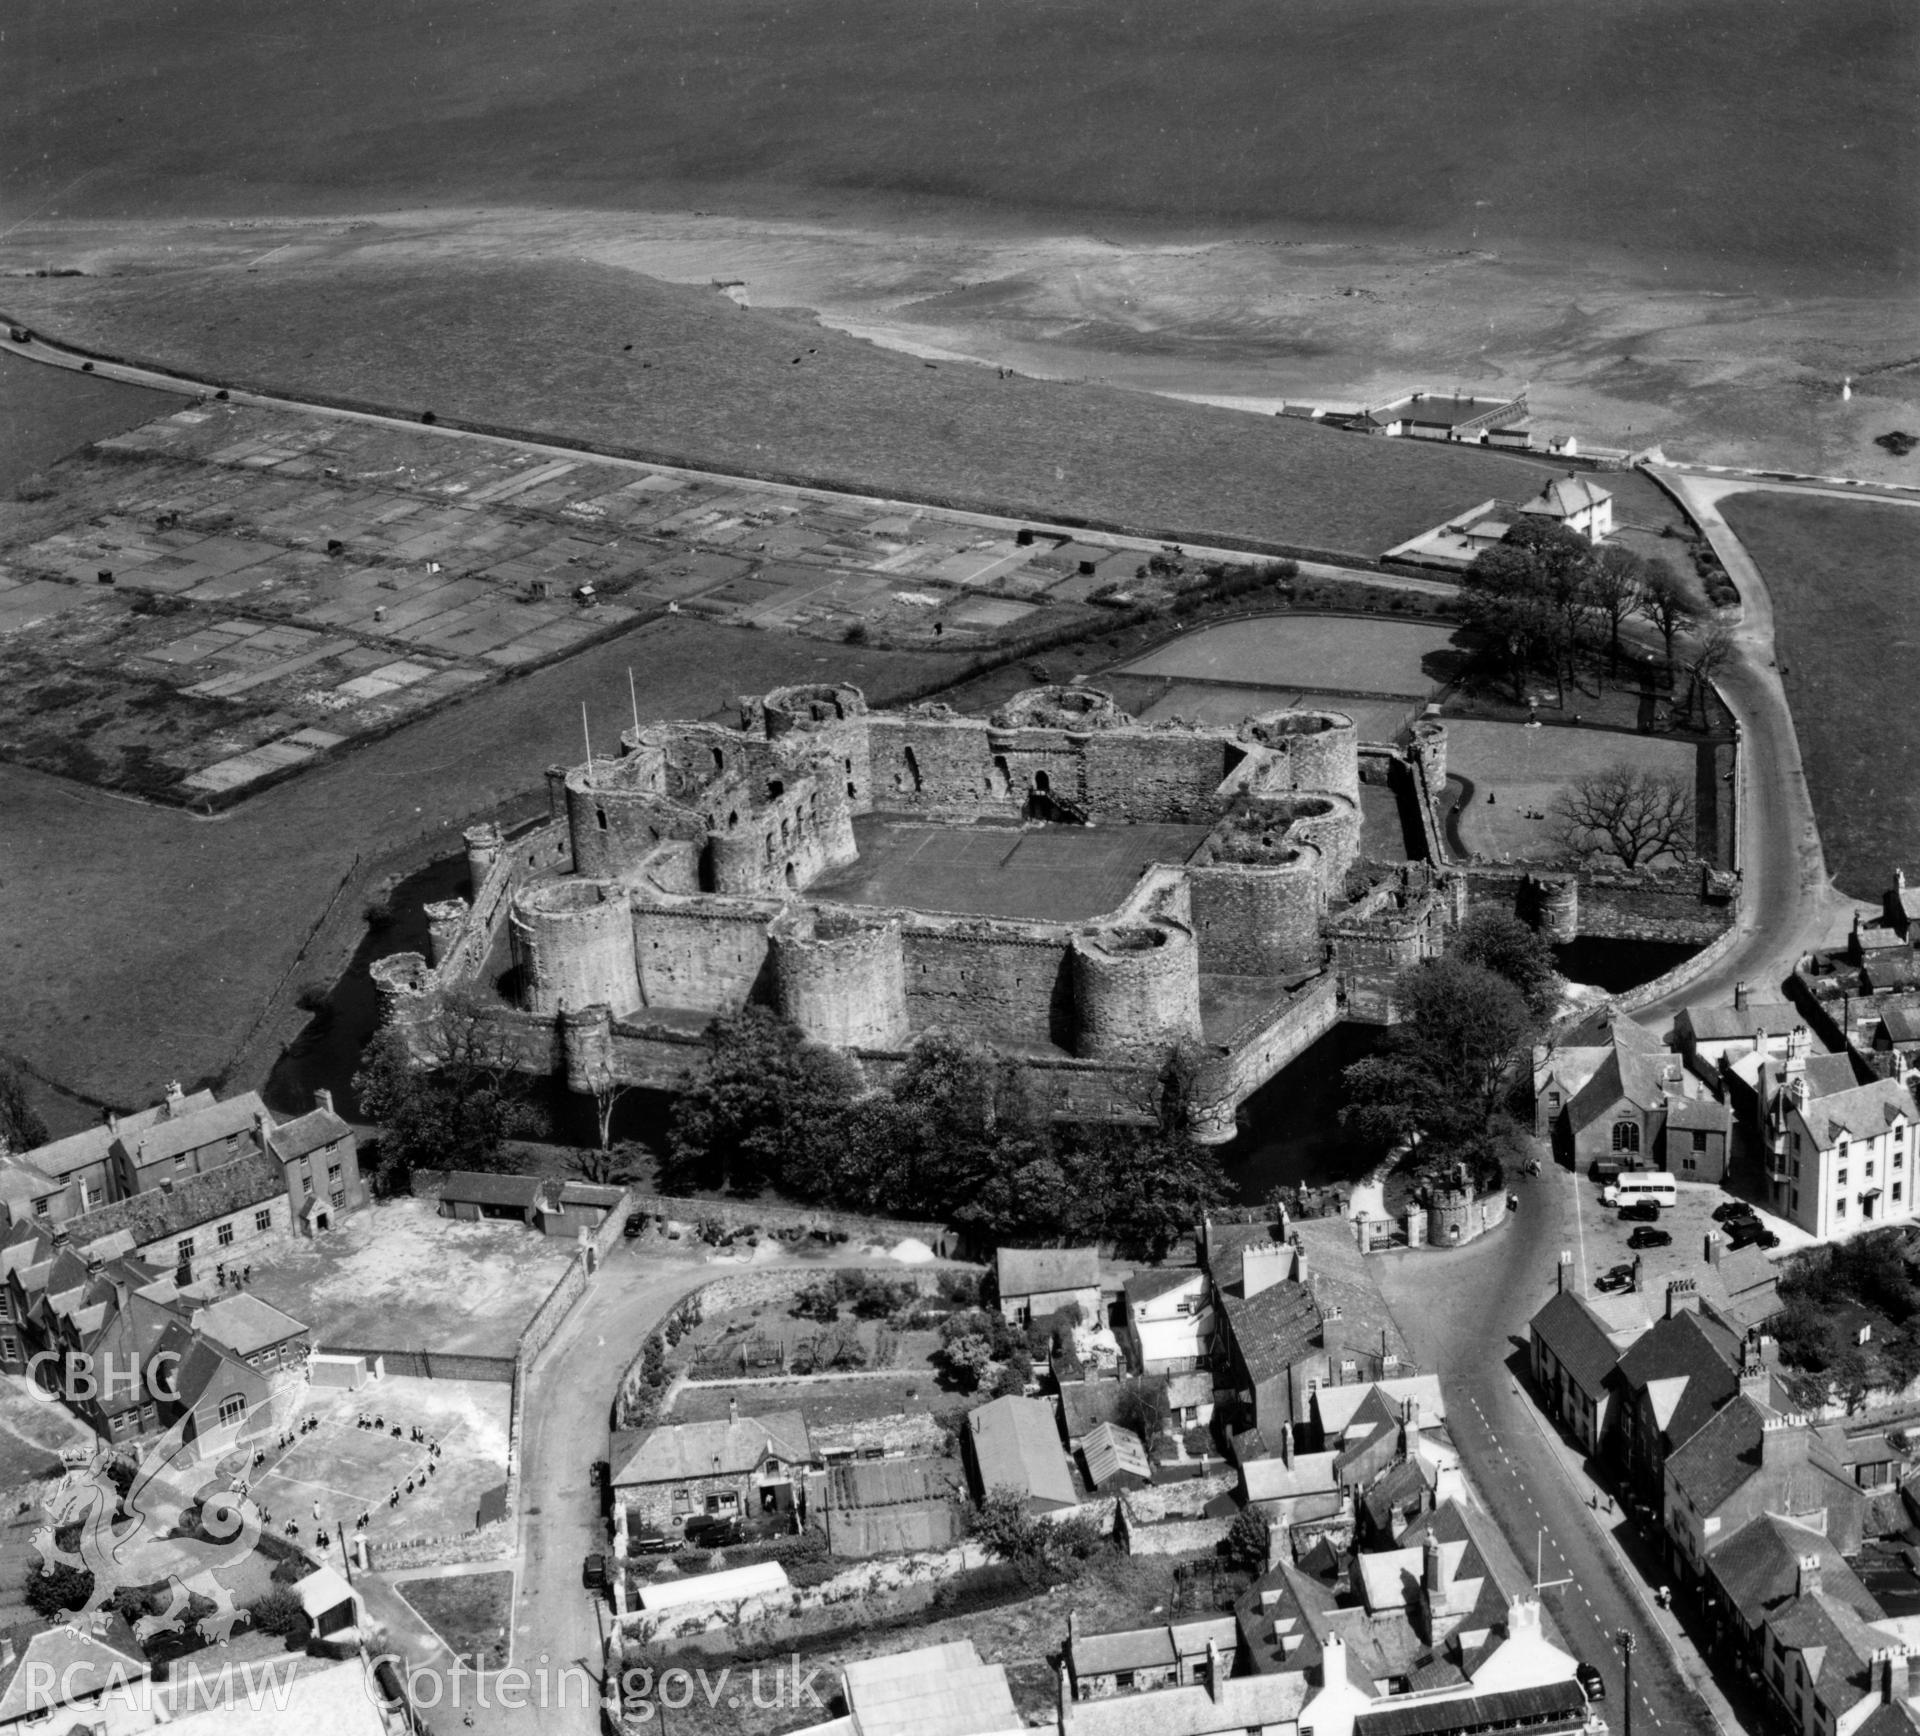 View of Beaumaris showing castle and grammar school. Oblique aerial photograph, 5?" cut roll film.